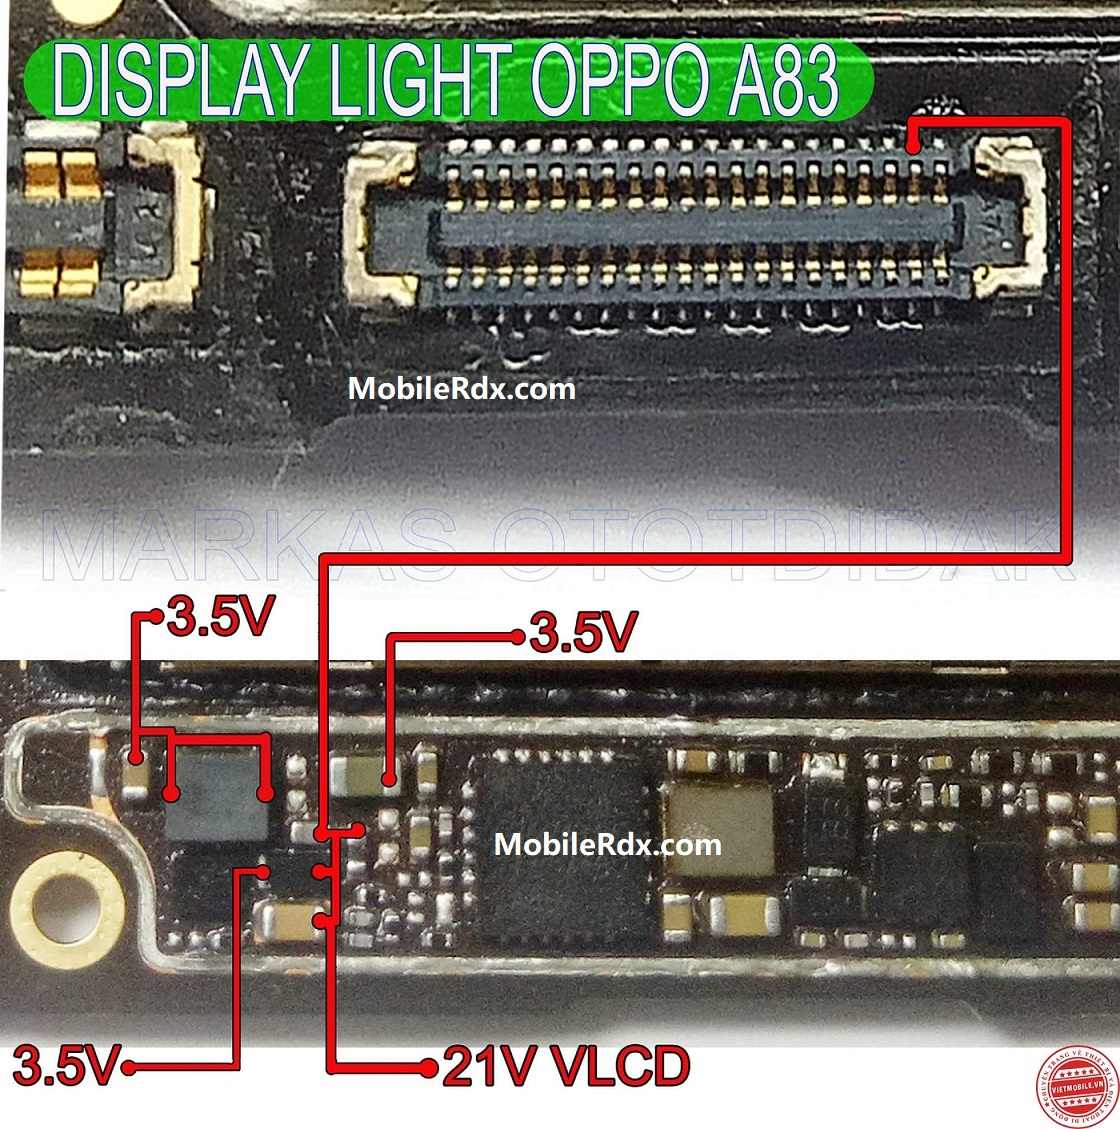 Oppo A83 Display Light Solution Backlight Ways1120 x 1129